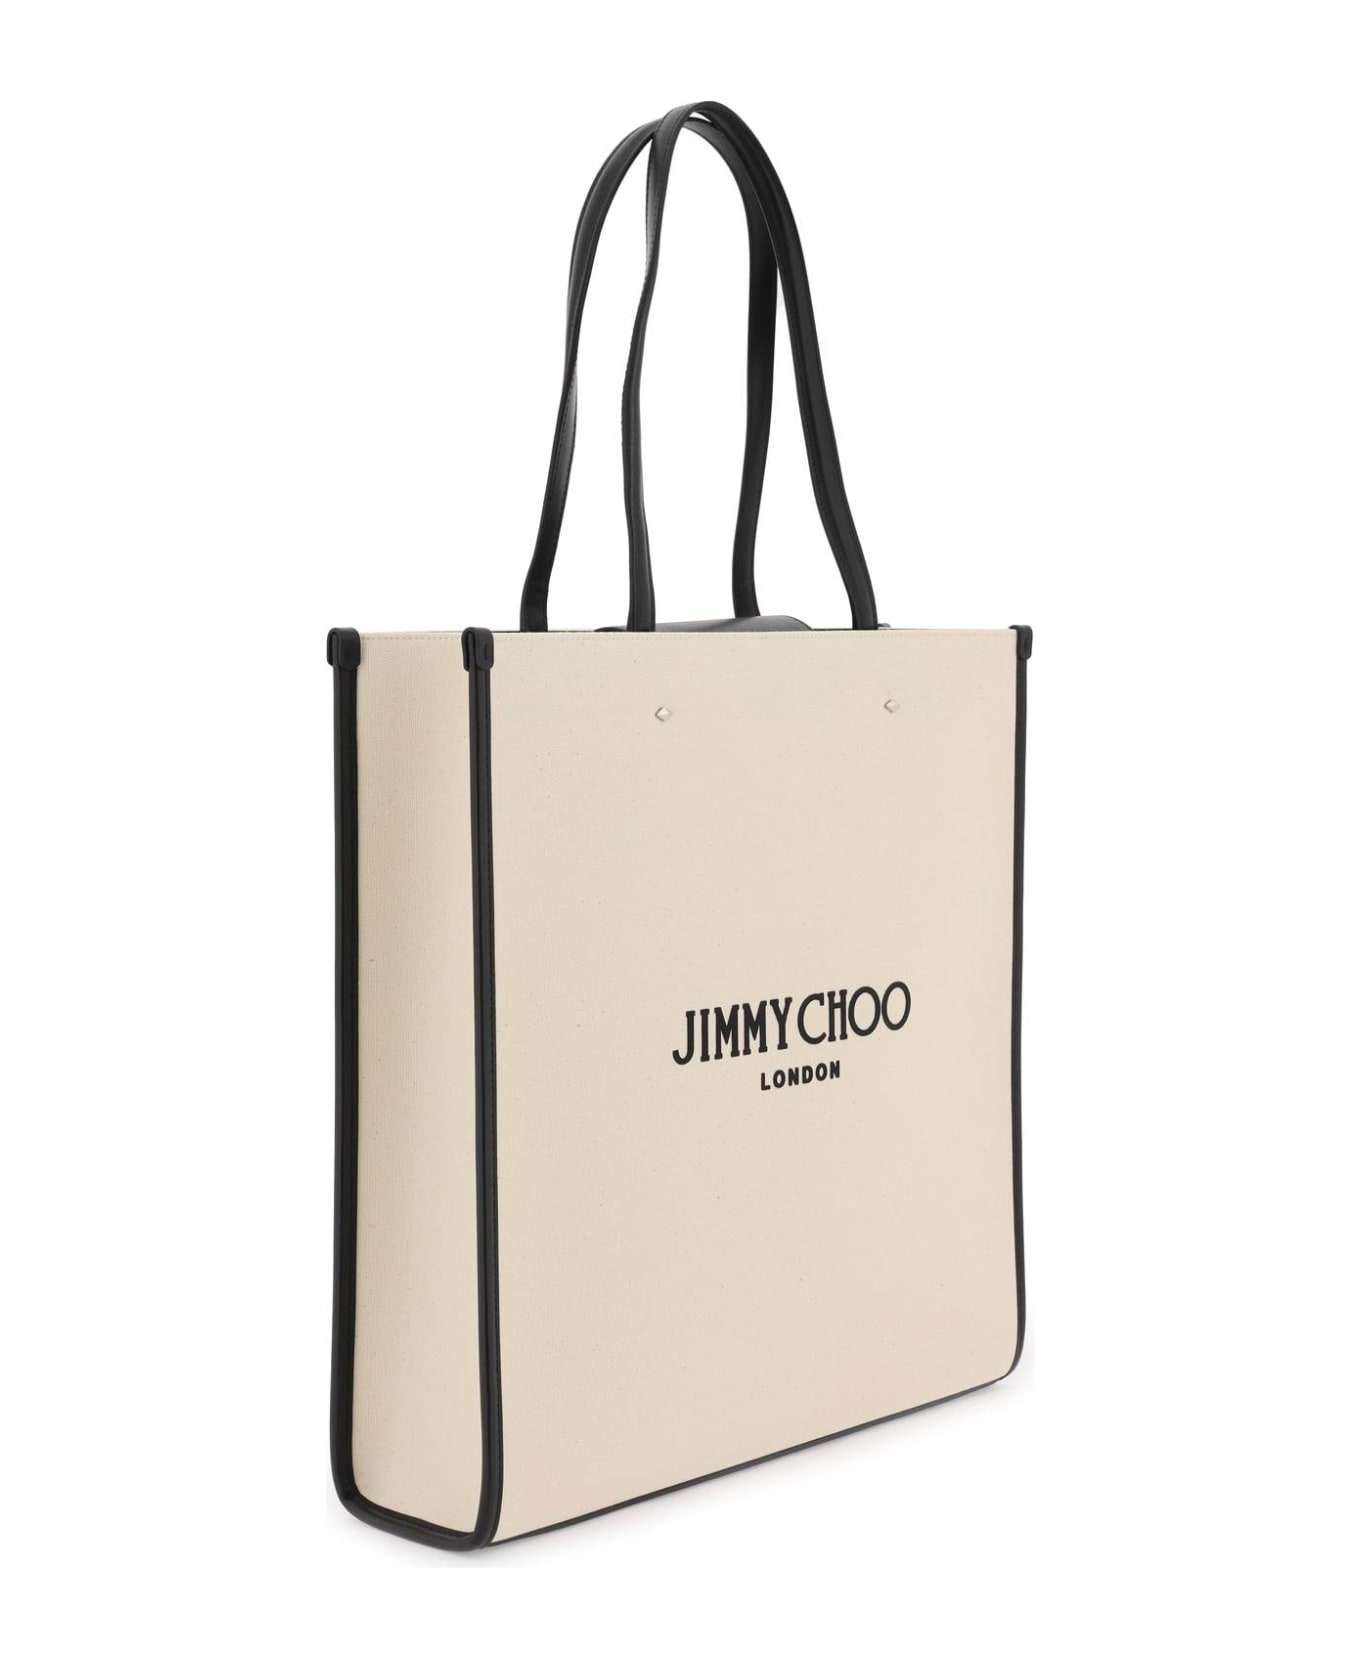 Jimmy Choo N/s Canvas Tote Bag - NATURAL BLACK SILVER (White)